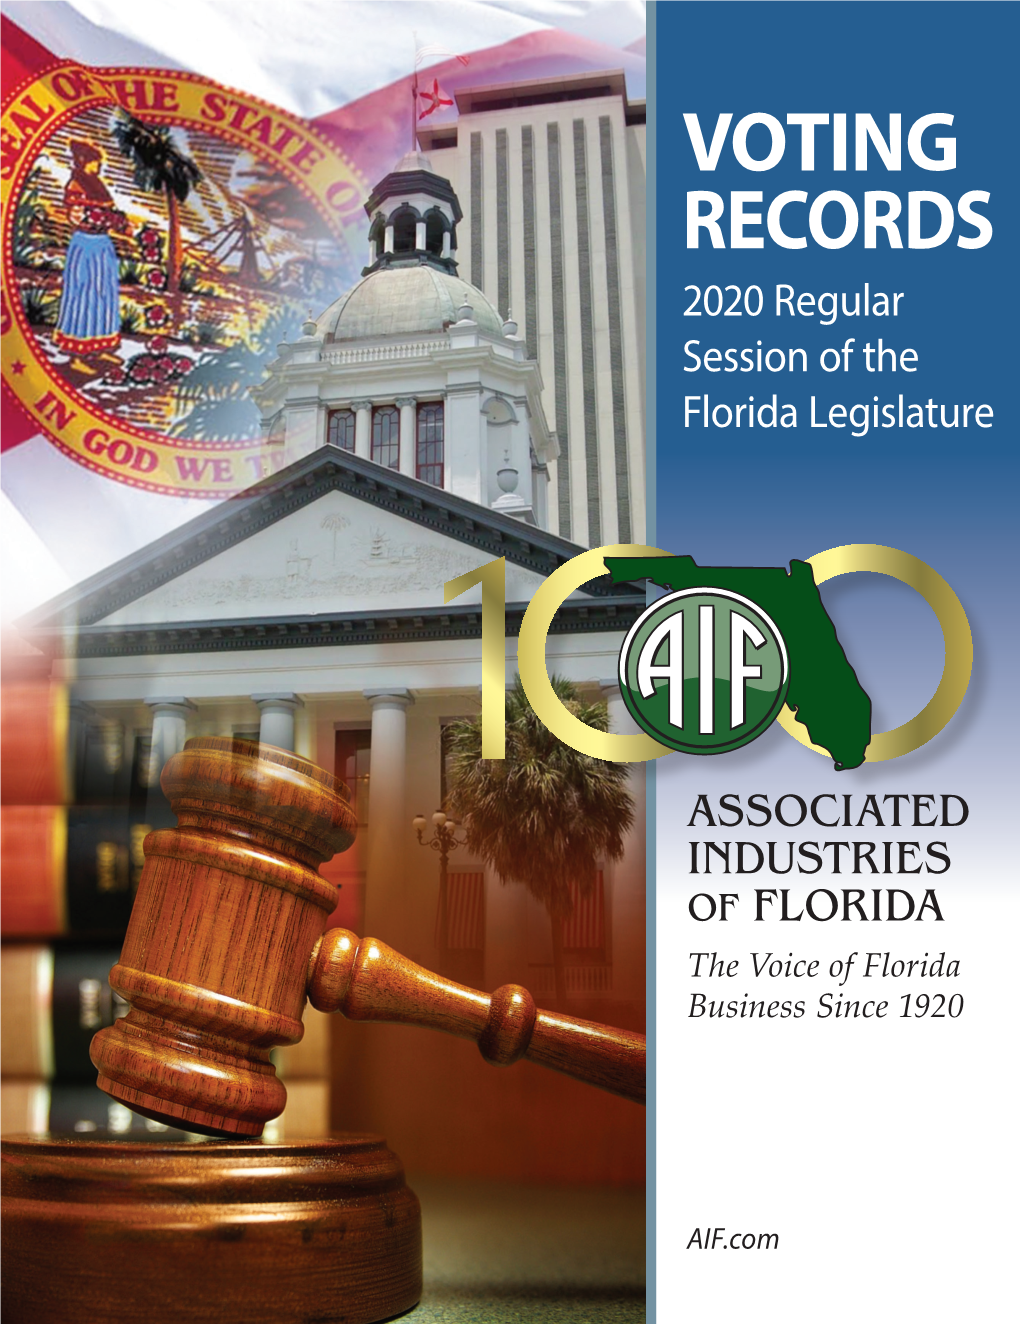 VOTING RECORDS 2020 Regular Session of the Florida Legislature